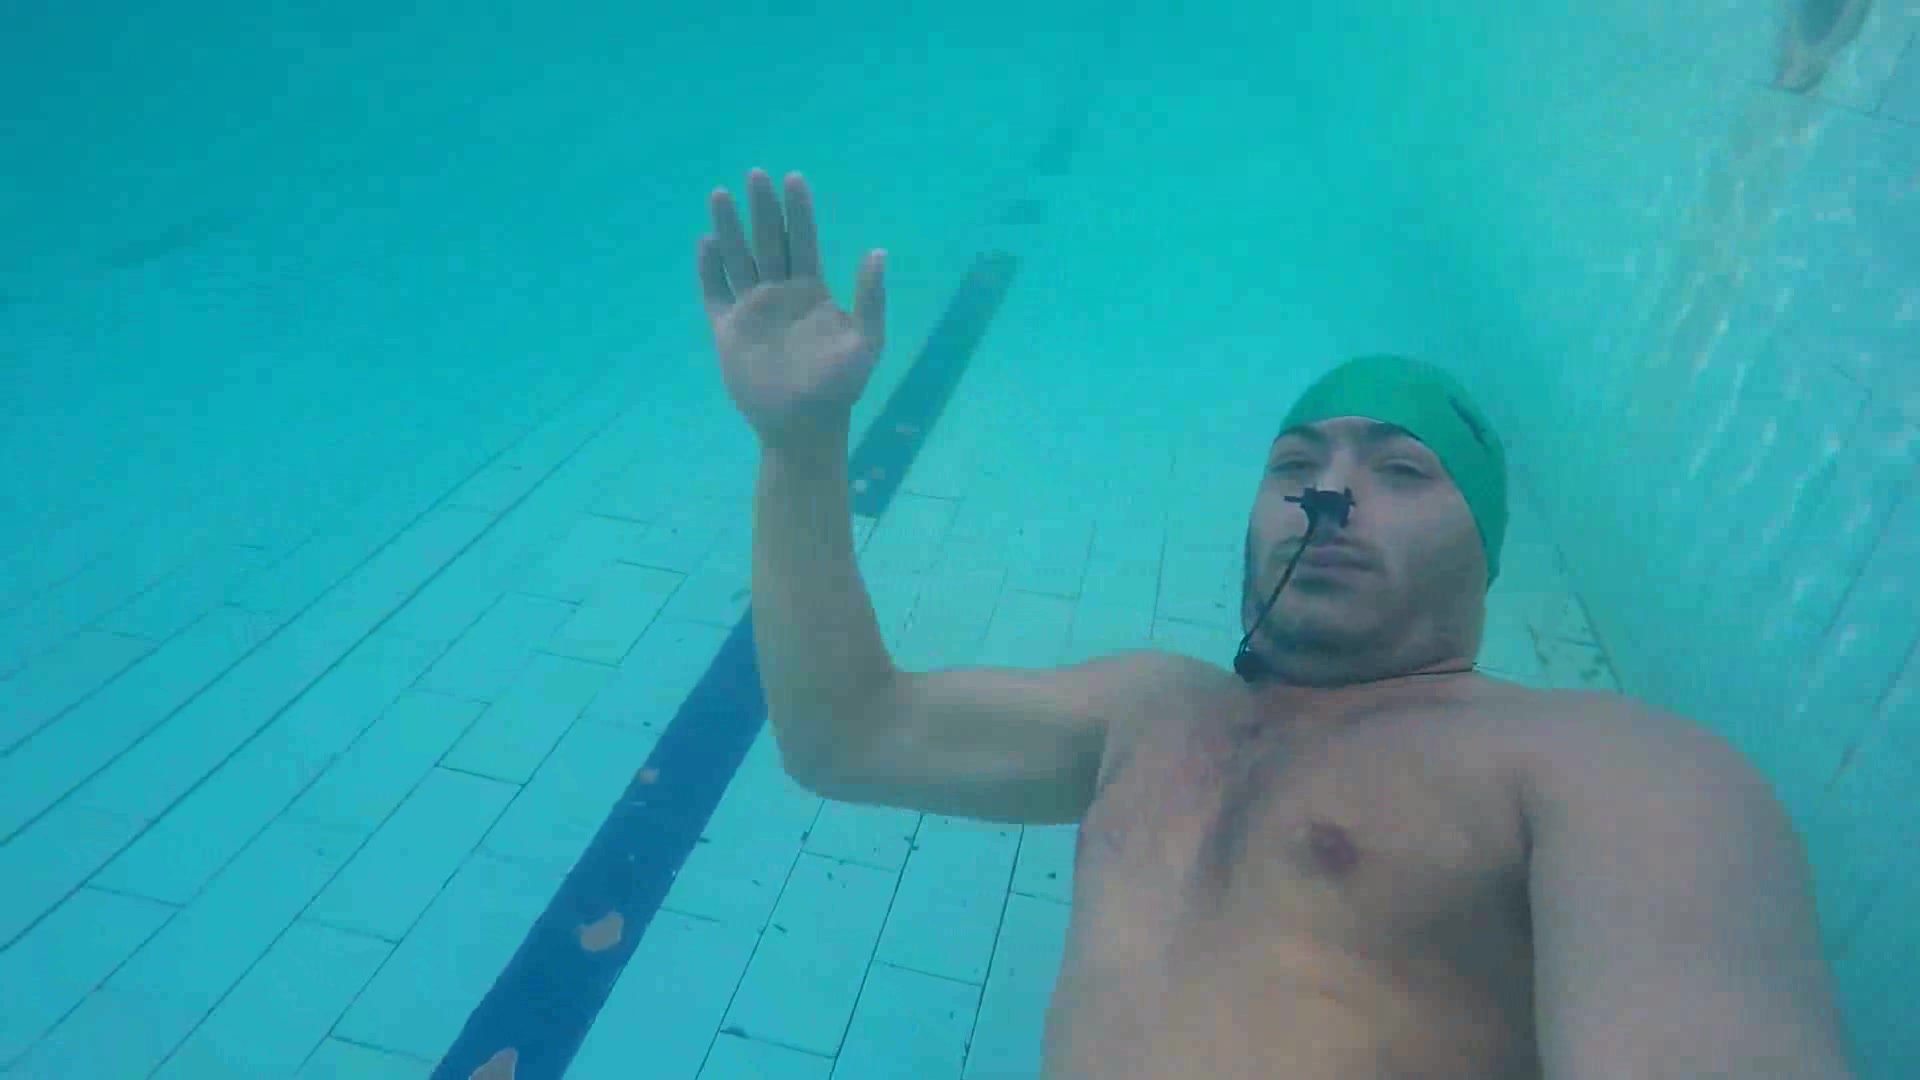 Kareem swimming barefaced underwater